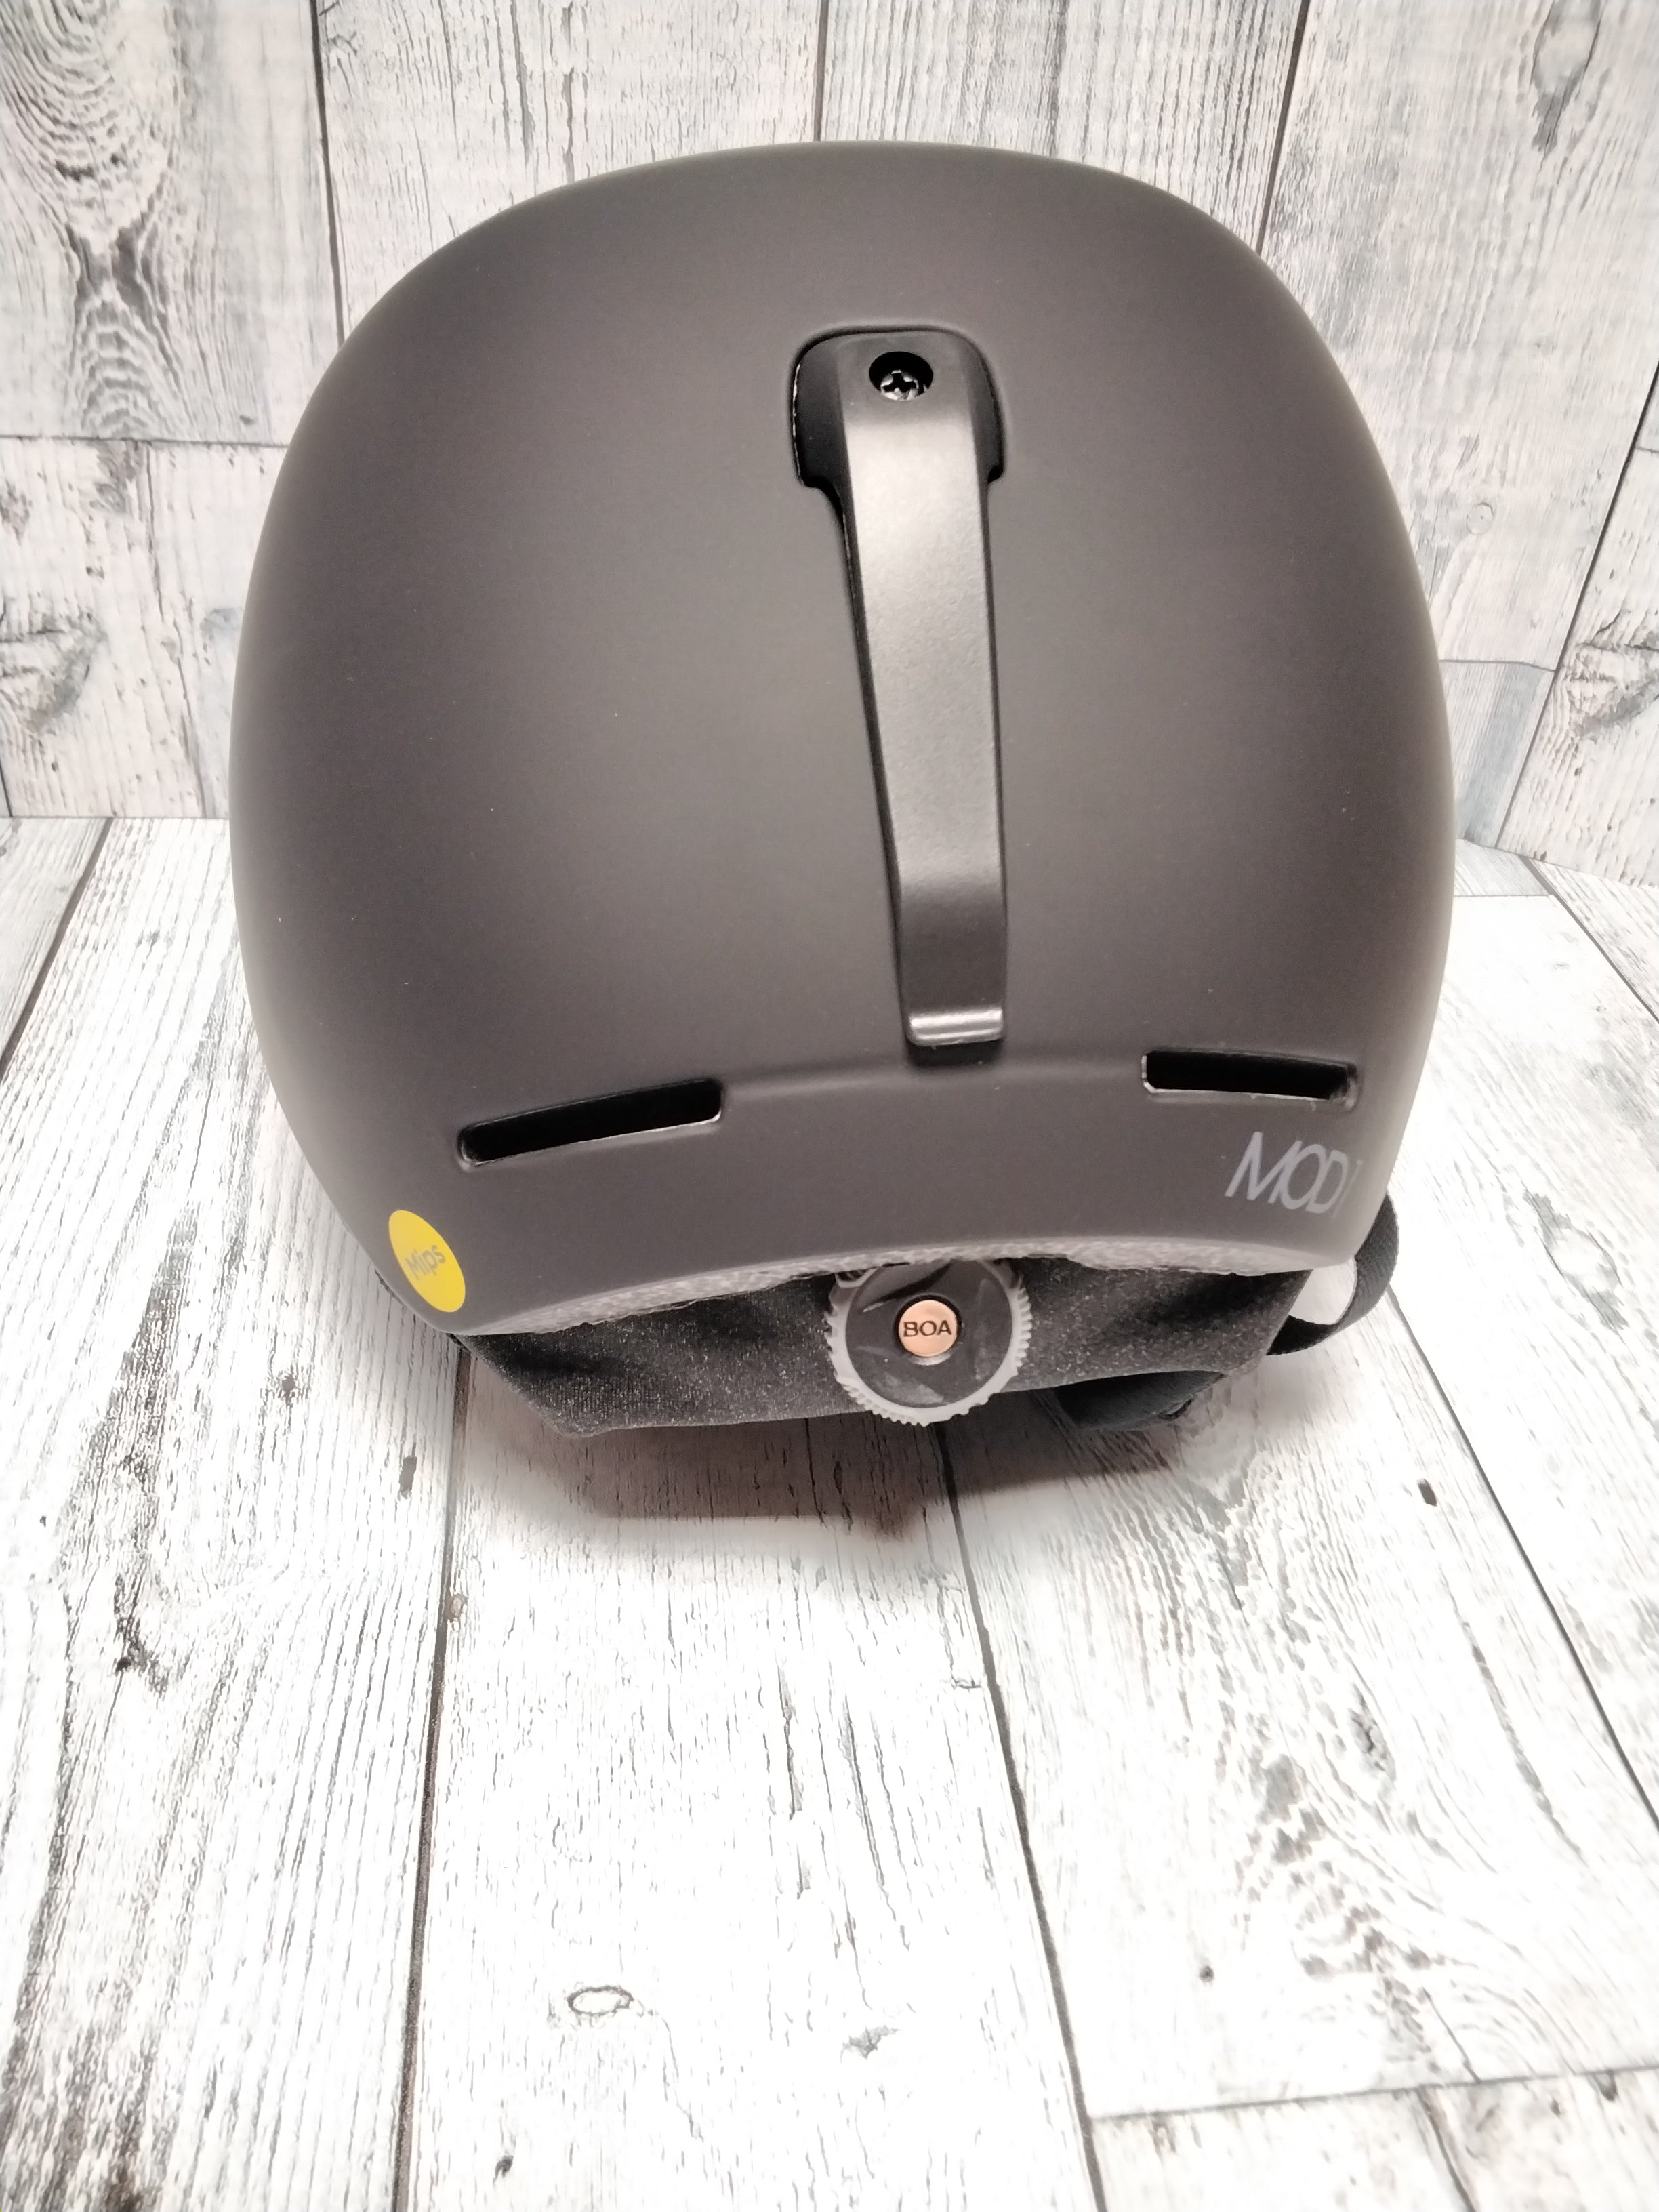 Oakley Mod1 MIPS Adult Ski Snowboarding Helmet, Blackout, Sz Large (7777652834542)